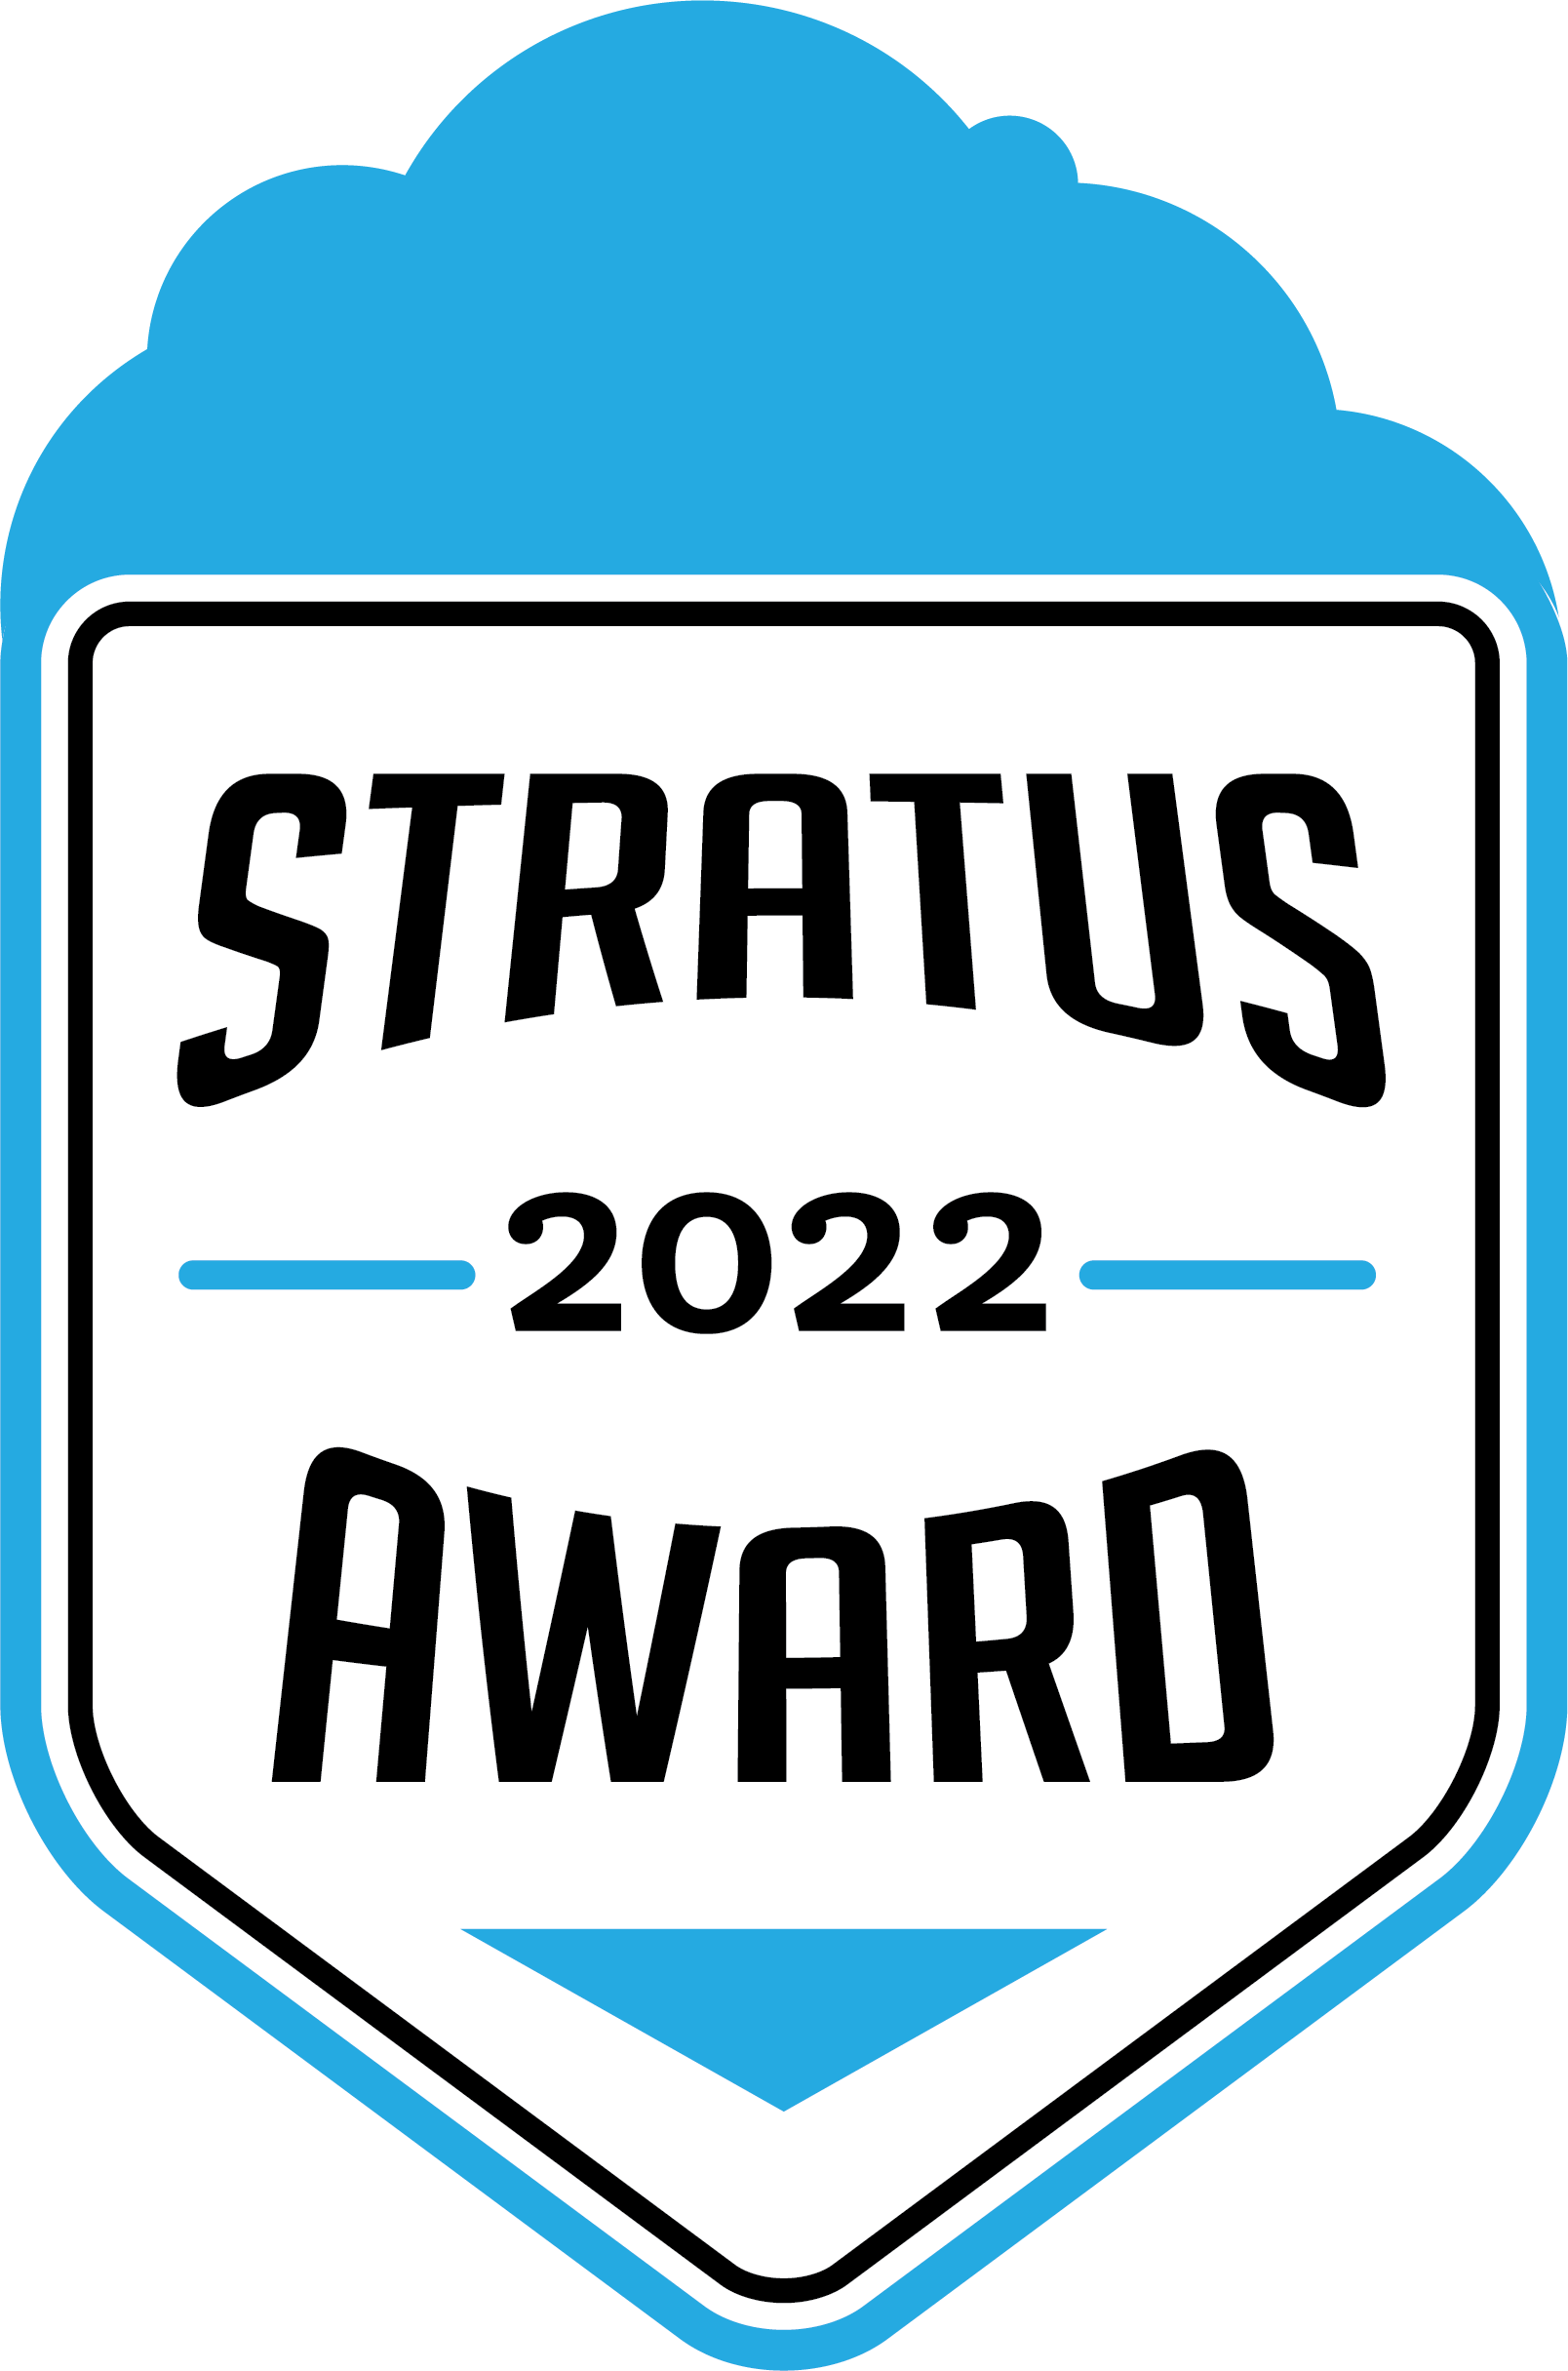 Stratus 2022 Award